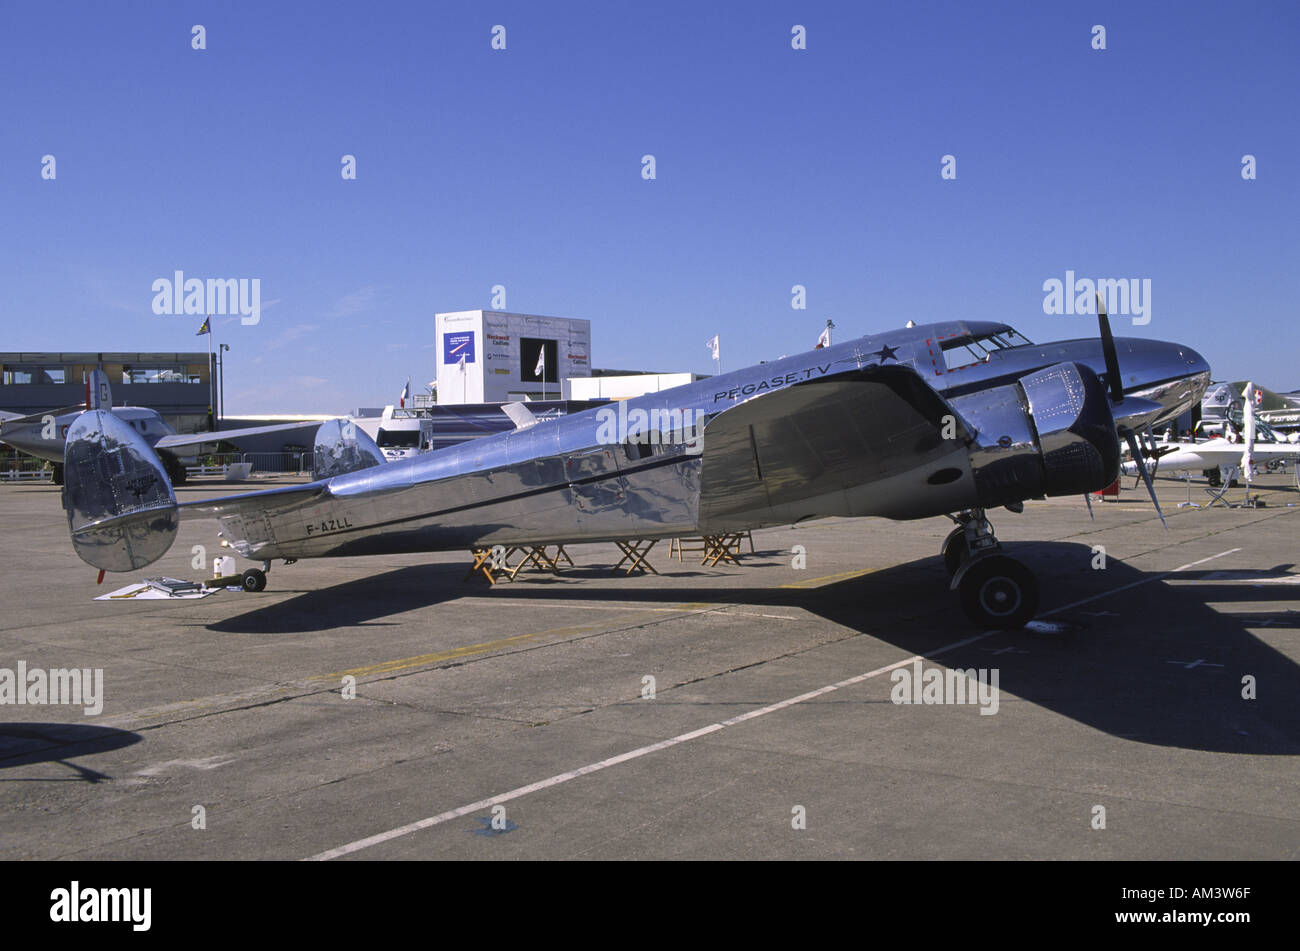 [Special Hobby]Le Lookheed 10 Electra d'Amelia Earhart   ---- F I N I ----  Lockheed-12a-electra-am3w6f